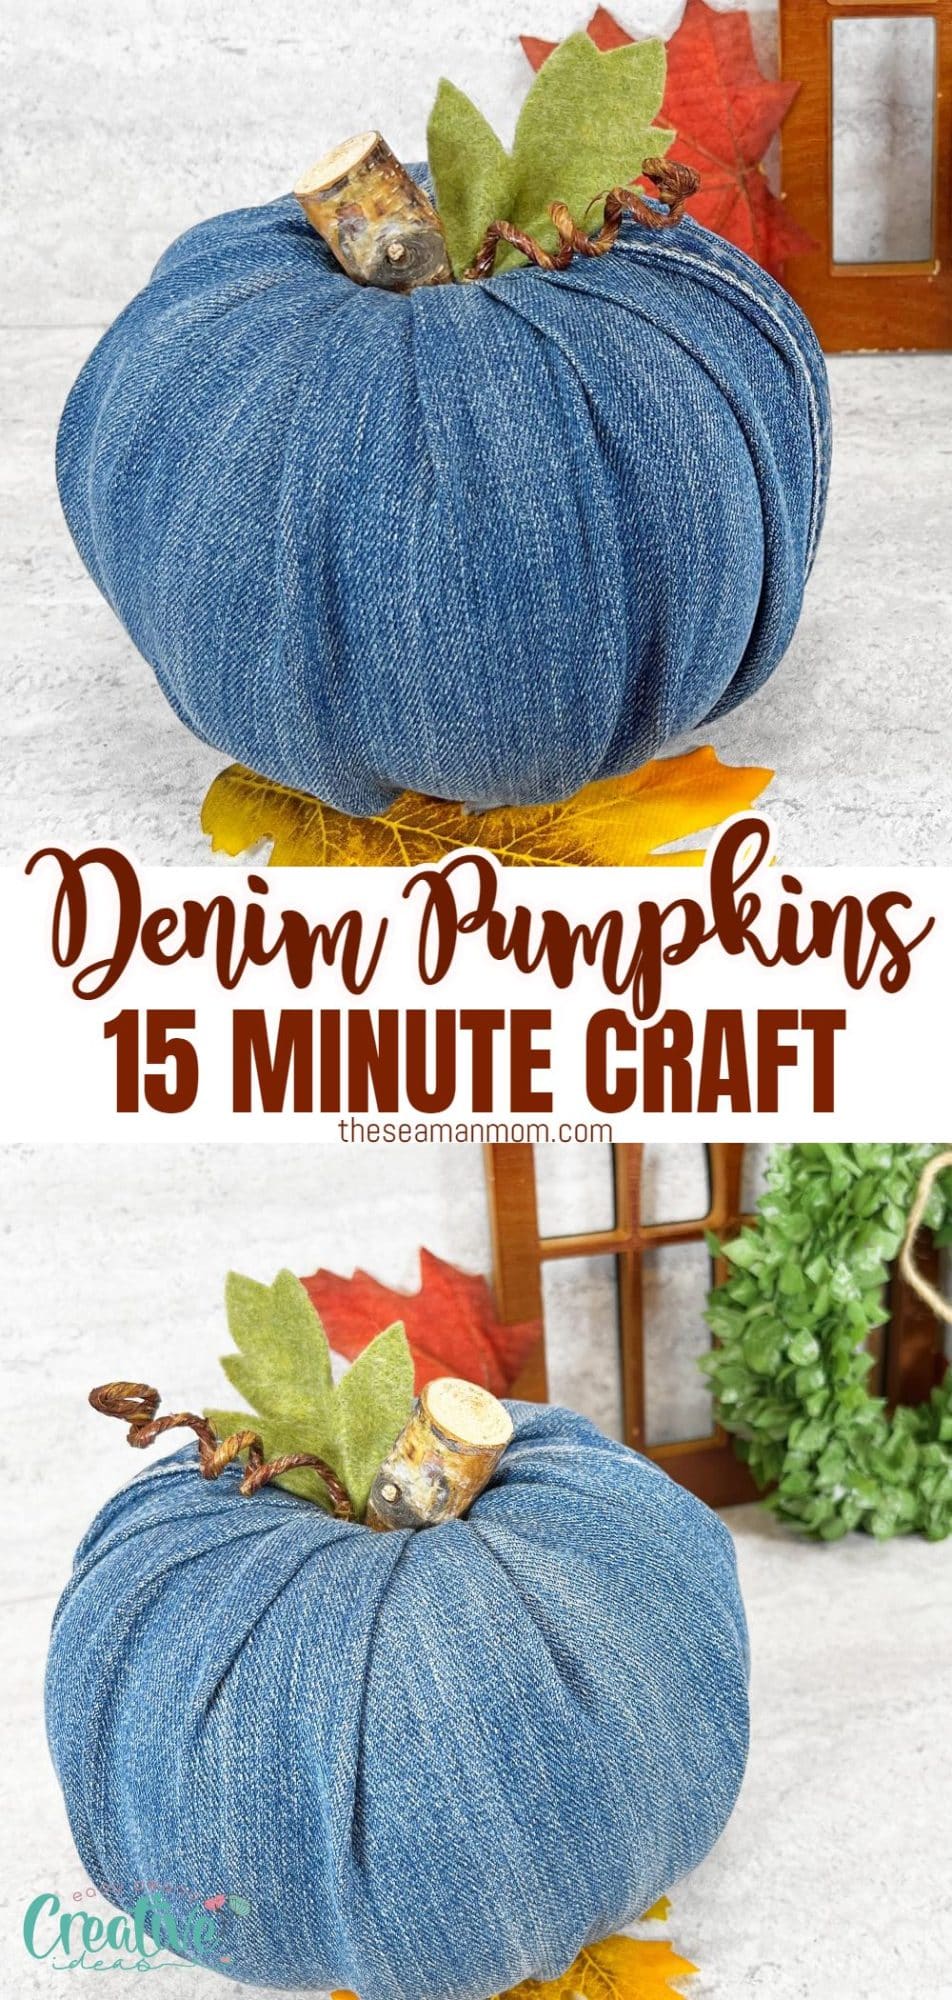 Photos collage of DIY pumpkins made with denim